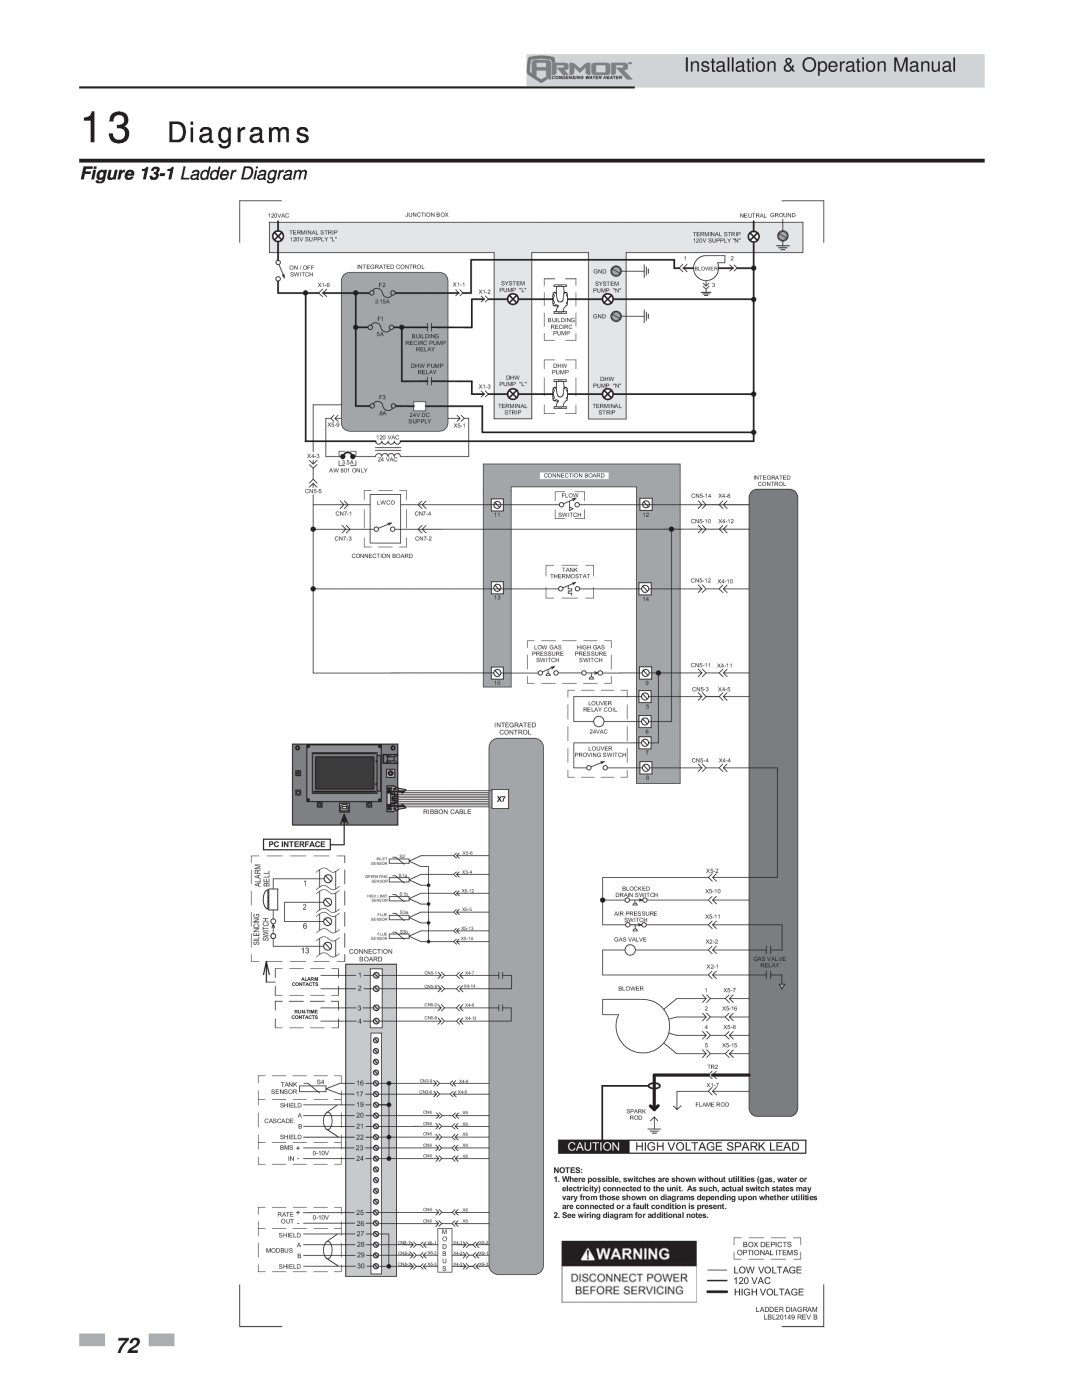 Lochinvar 151 Diagrams, 1 Ladder Diagram, Installation & Operation Manual, Low Voltage, 120 VAC, High Voltage, Notes 